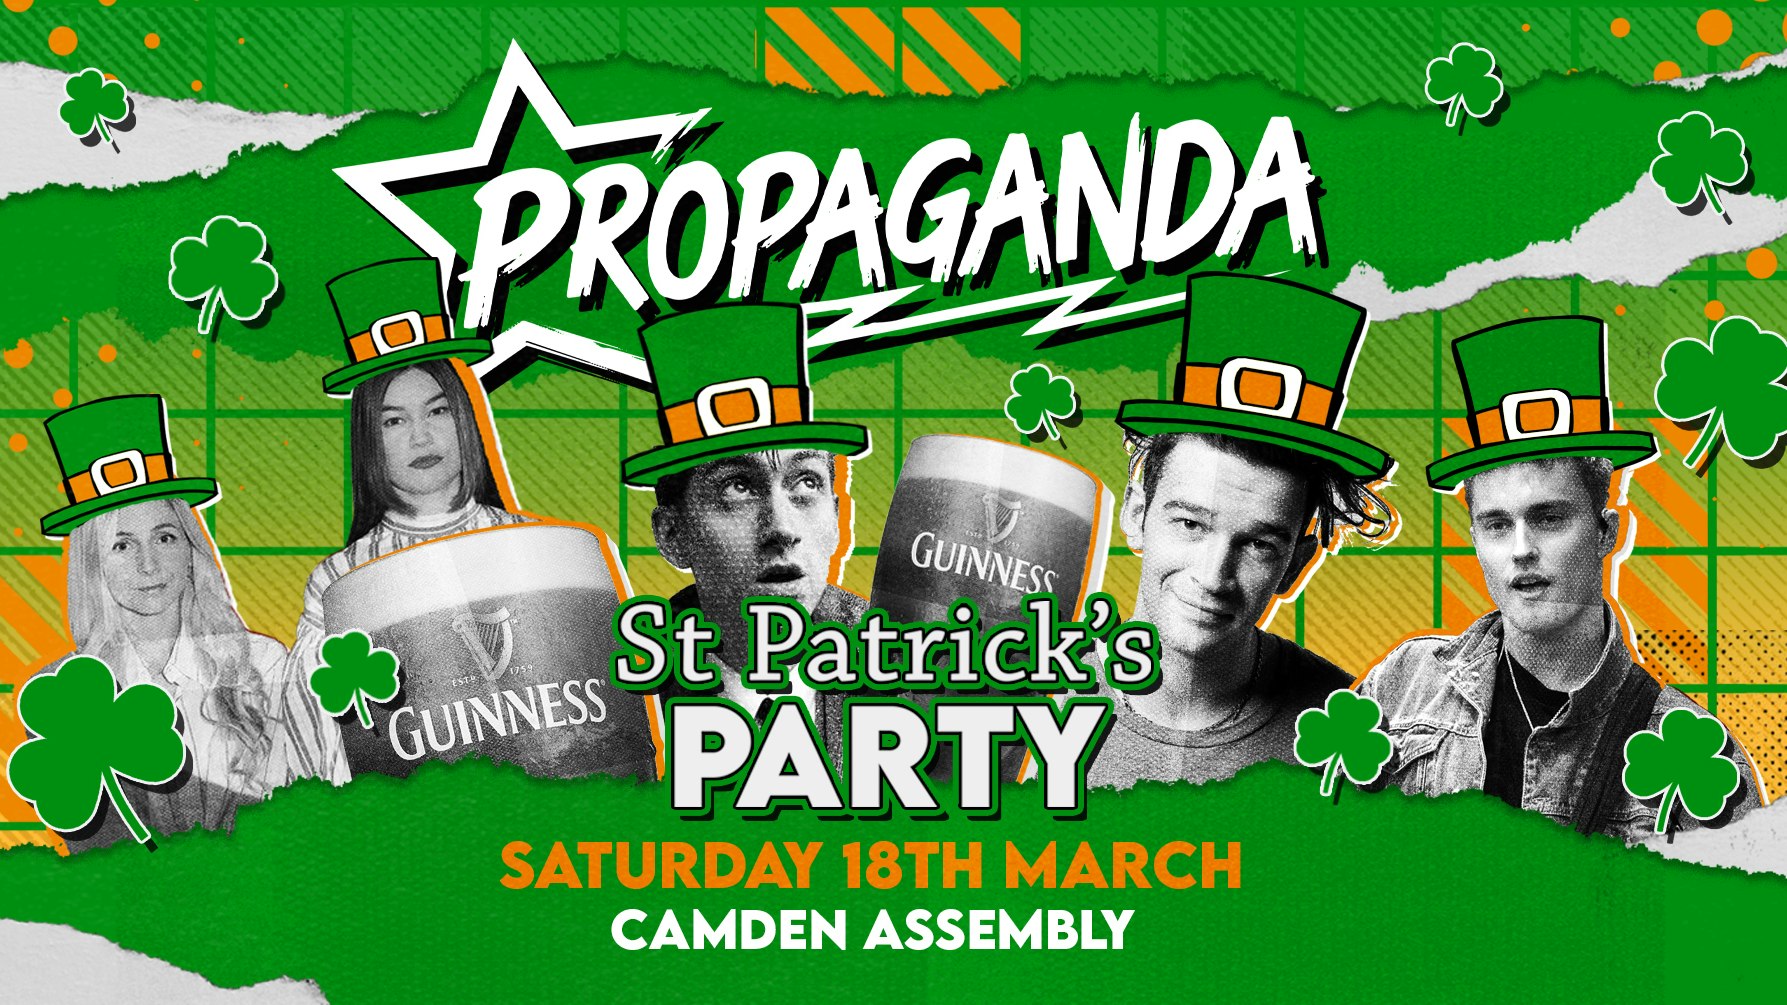 TONIGHT! Propaganda London – St Patricks Party at Camden Assembly!